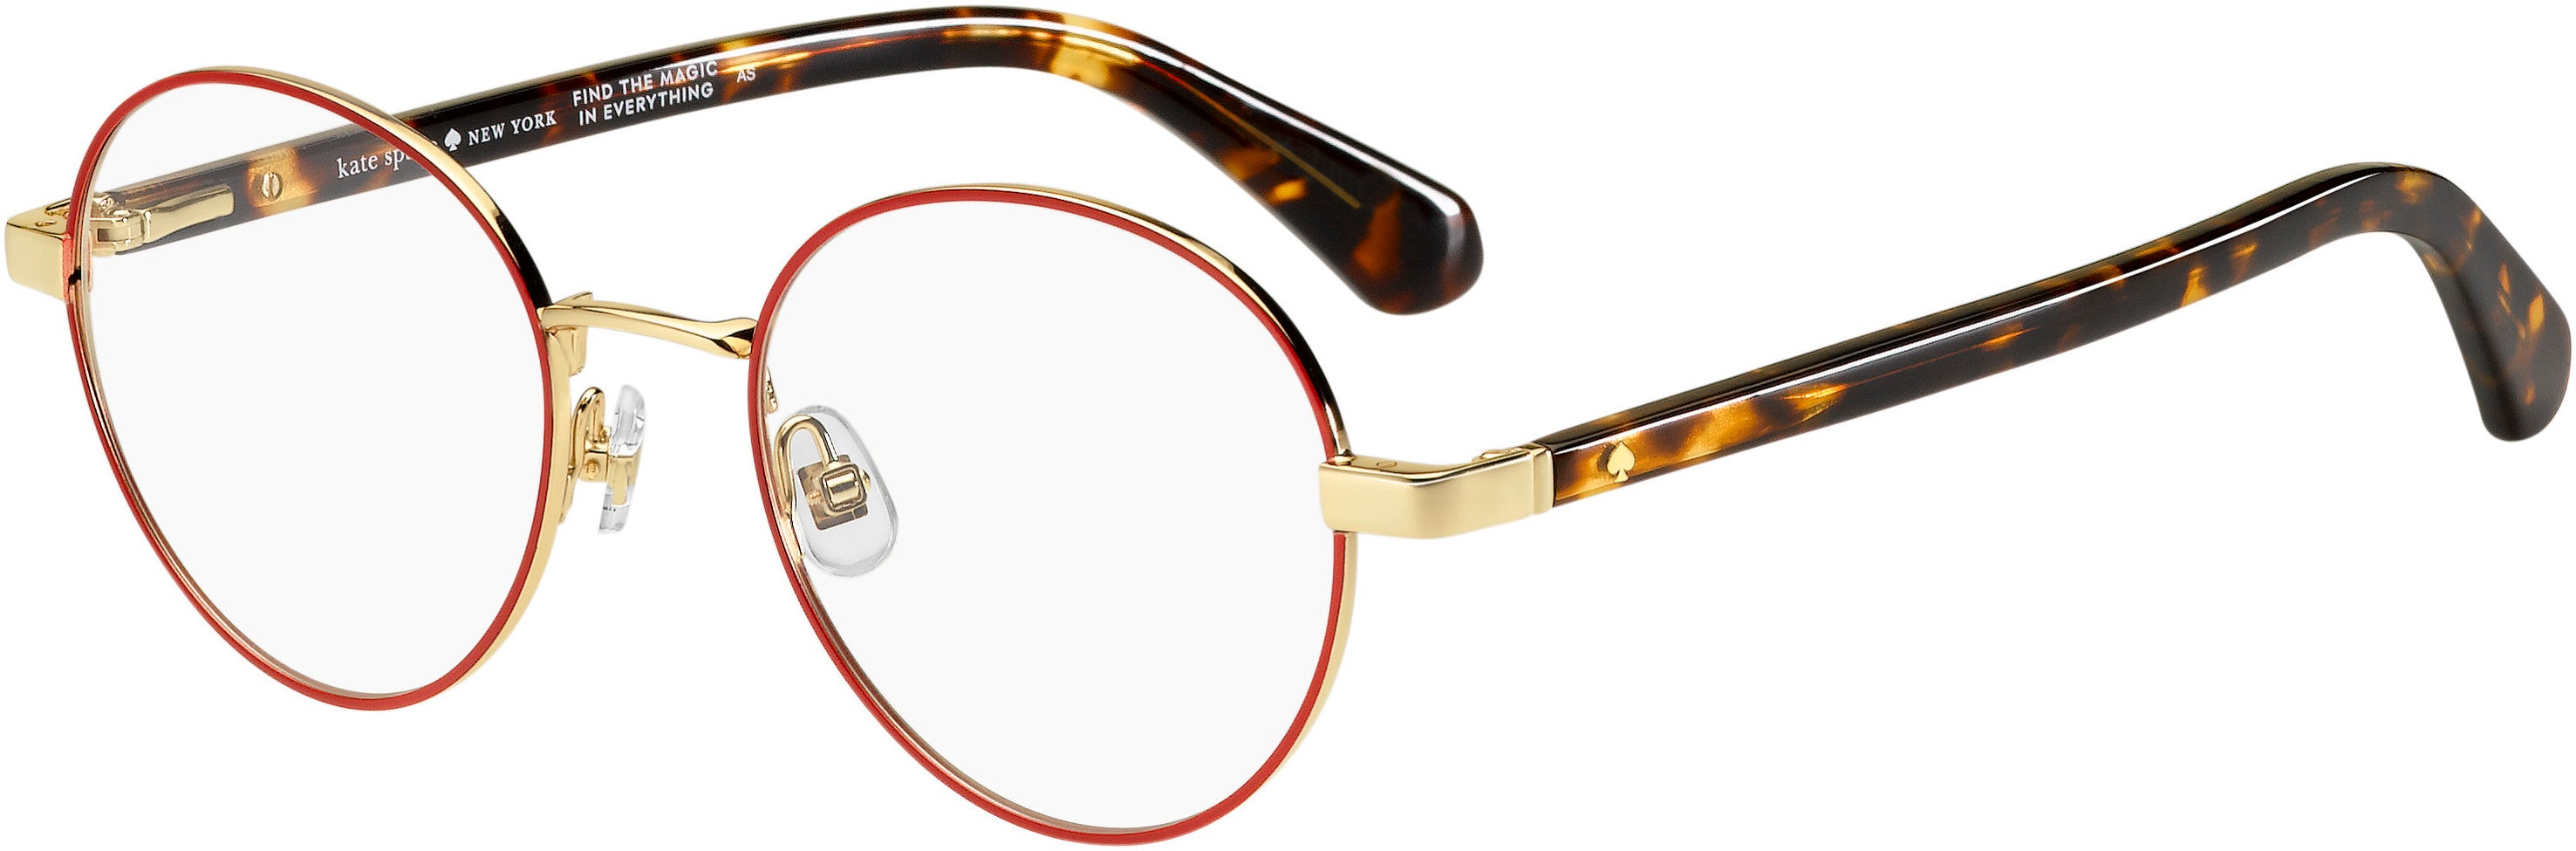 Kate Spade Marciann Oval Modified Eyeglasses 0Y11-0Y11  Gold Red (00 Demo Lens)